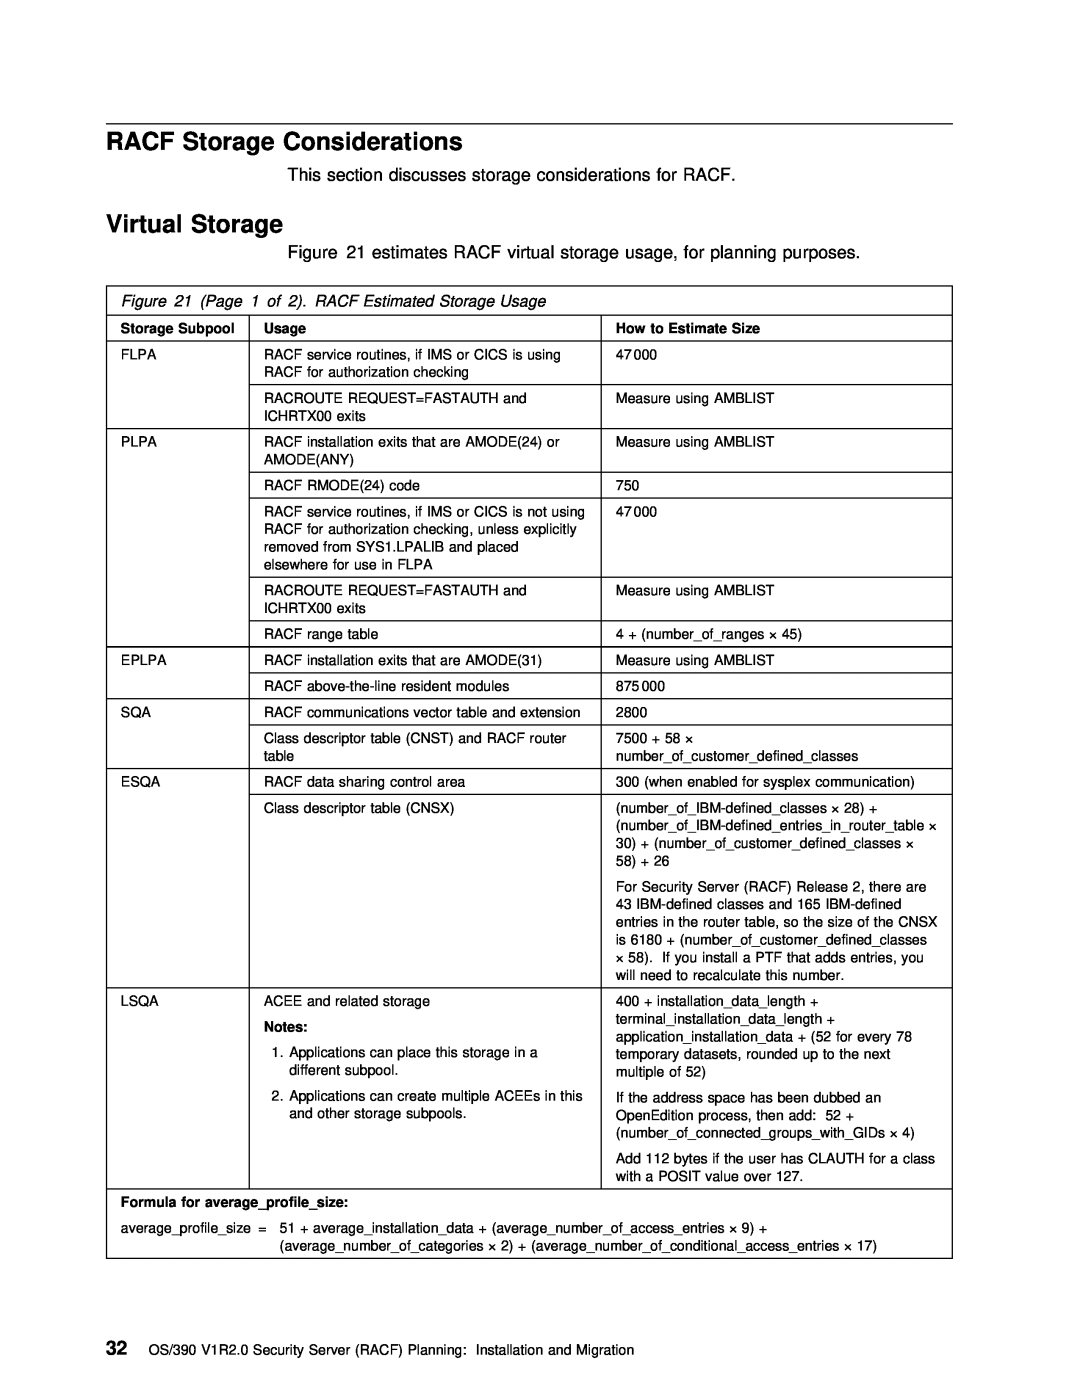 IBM GC28-1920-01 RACF Storage Considerations, Virtual Storage, This section discusses storage considerations for RACF 